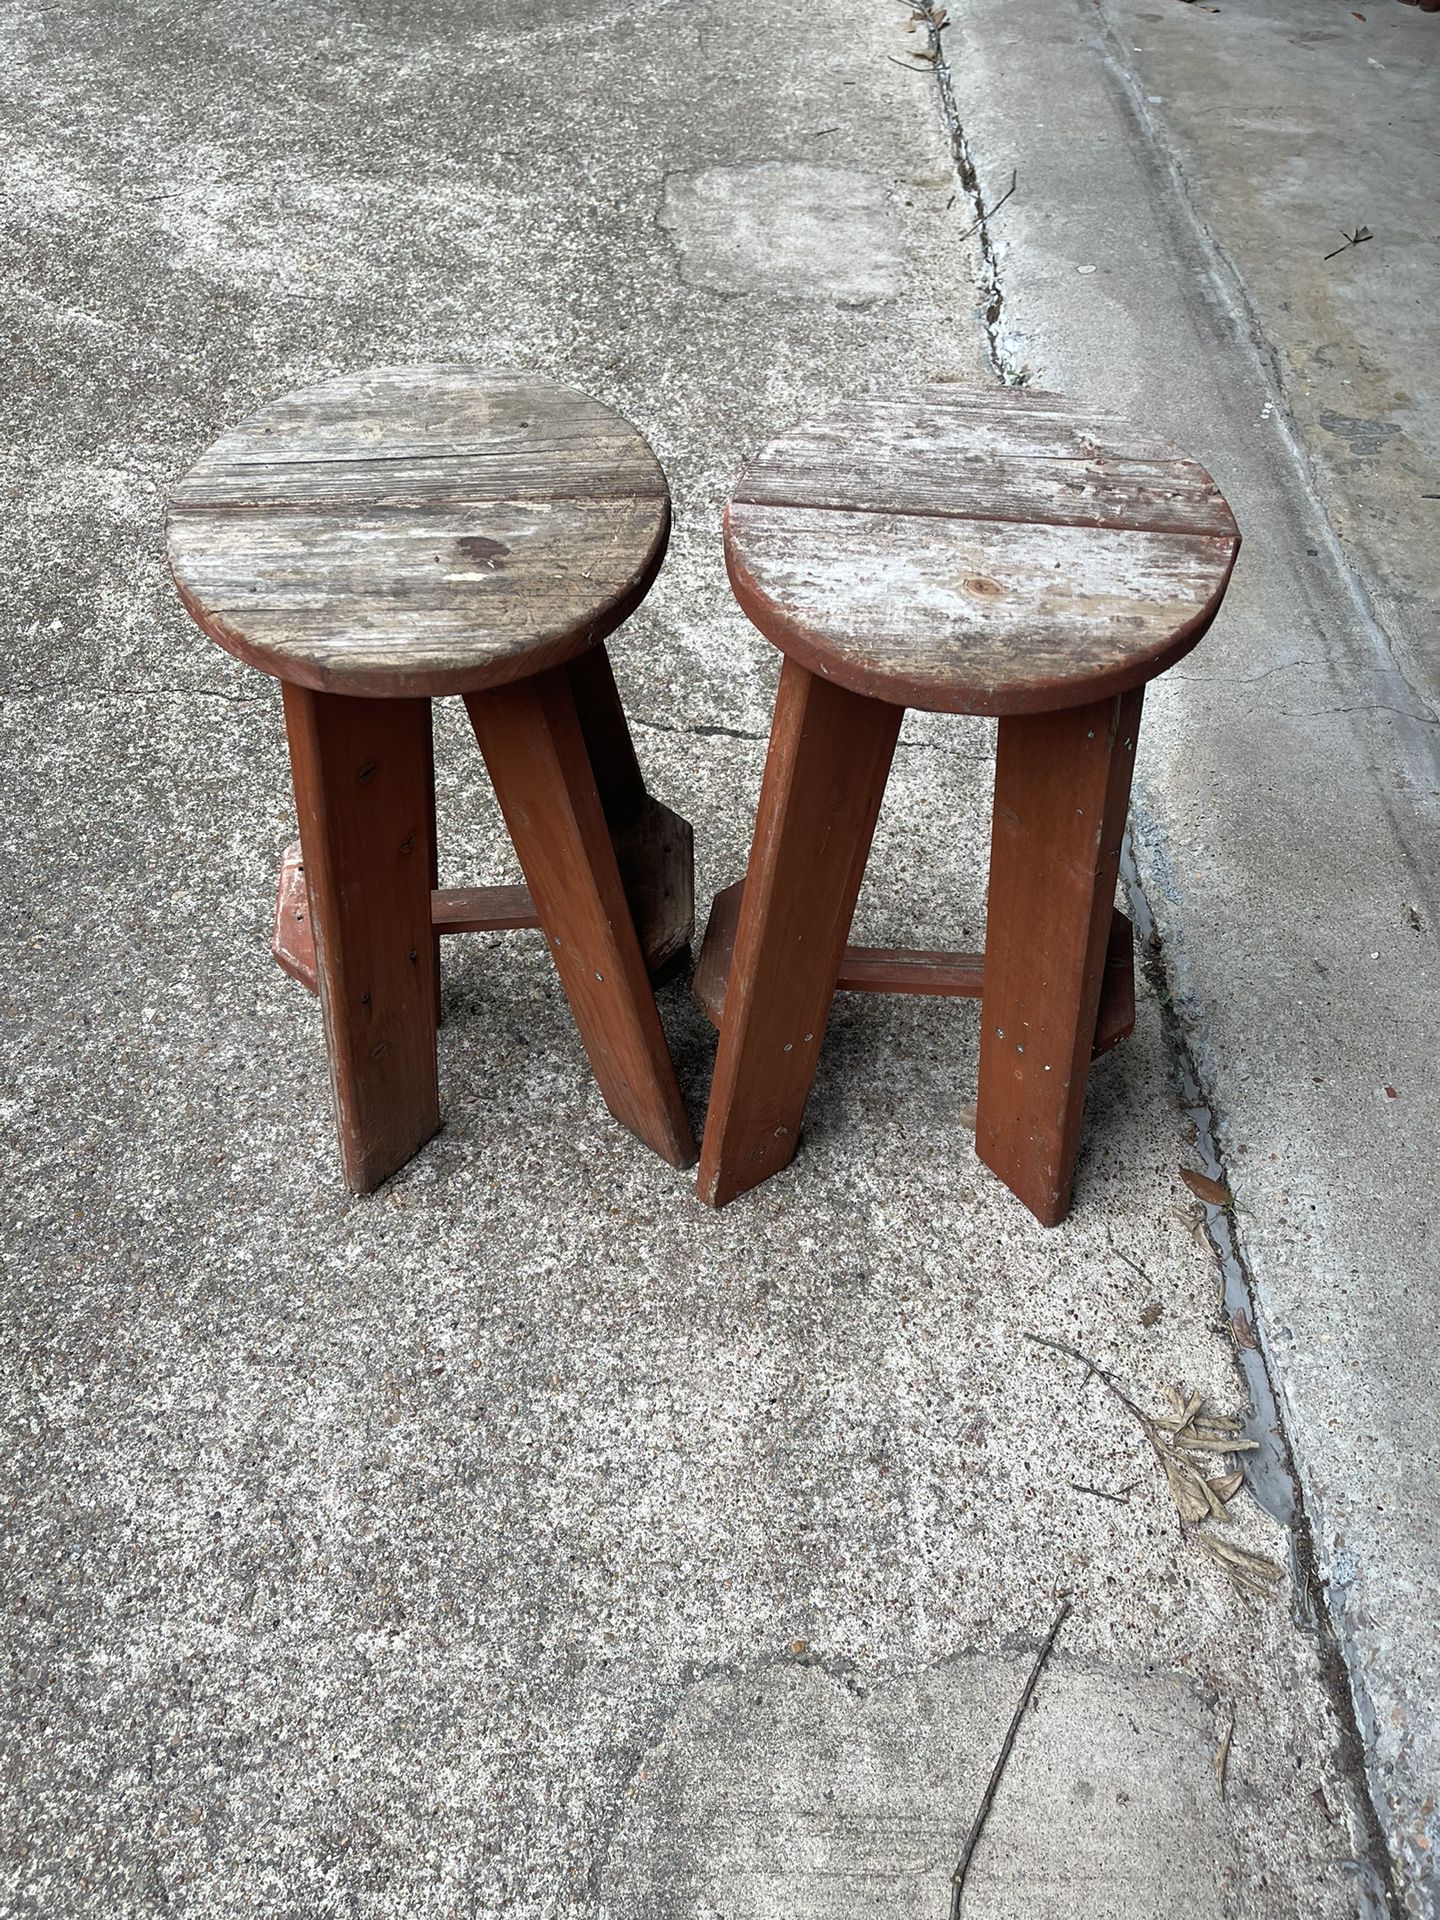 Vintage Wooden Stools 23” Tall